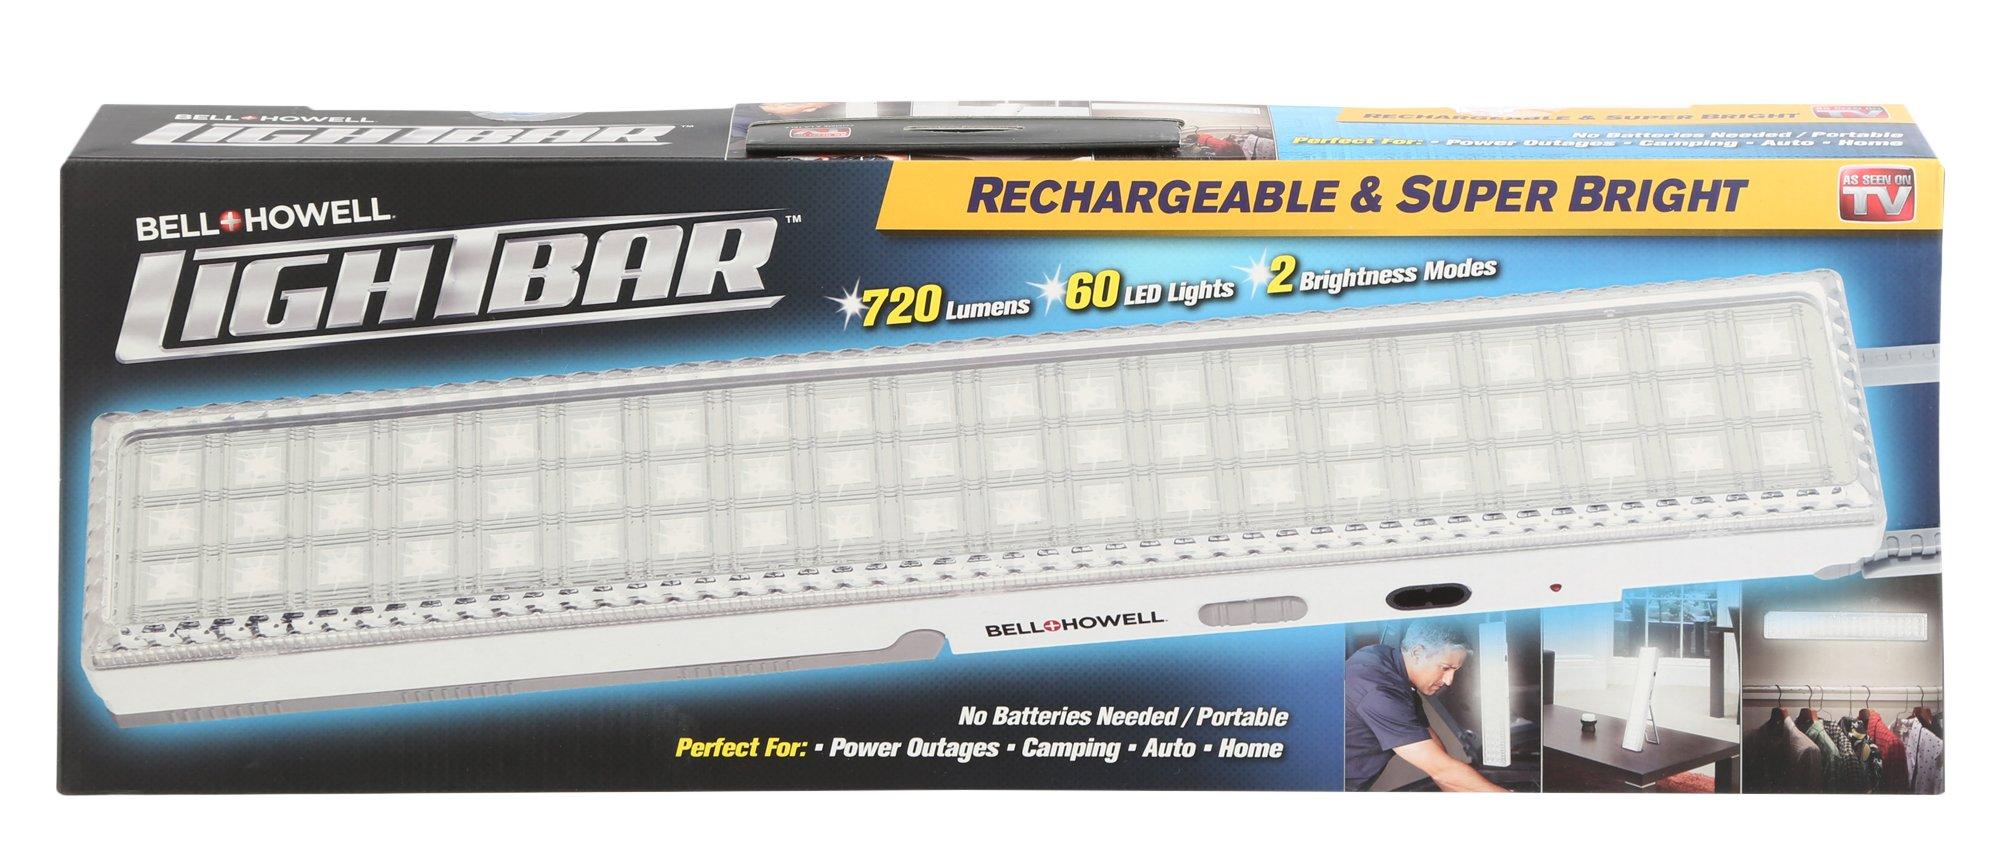 Rechargeable & Super Bright Light Bar